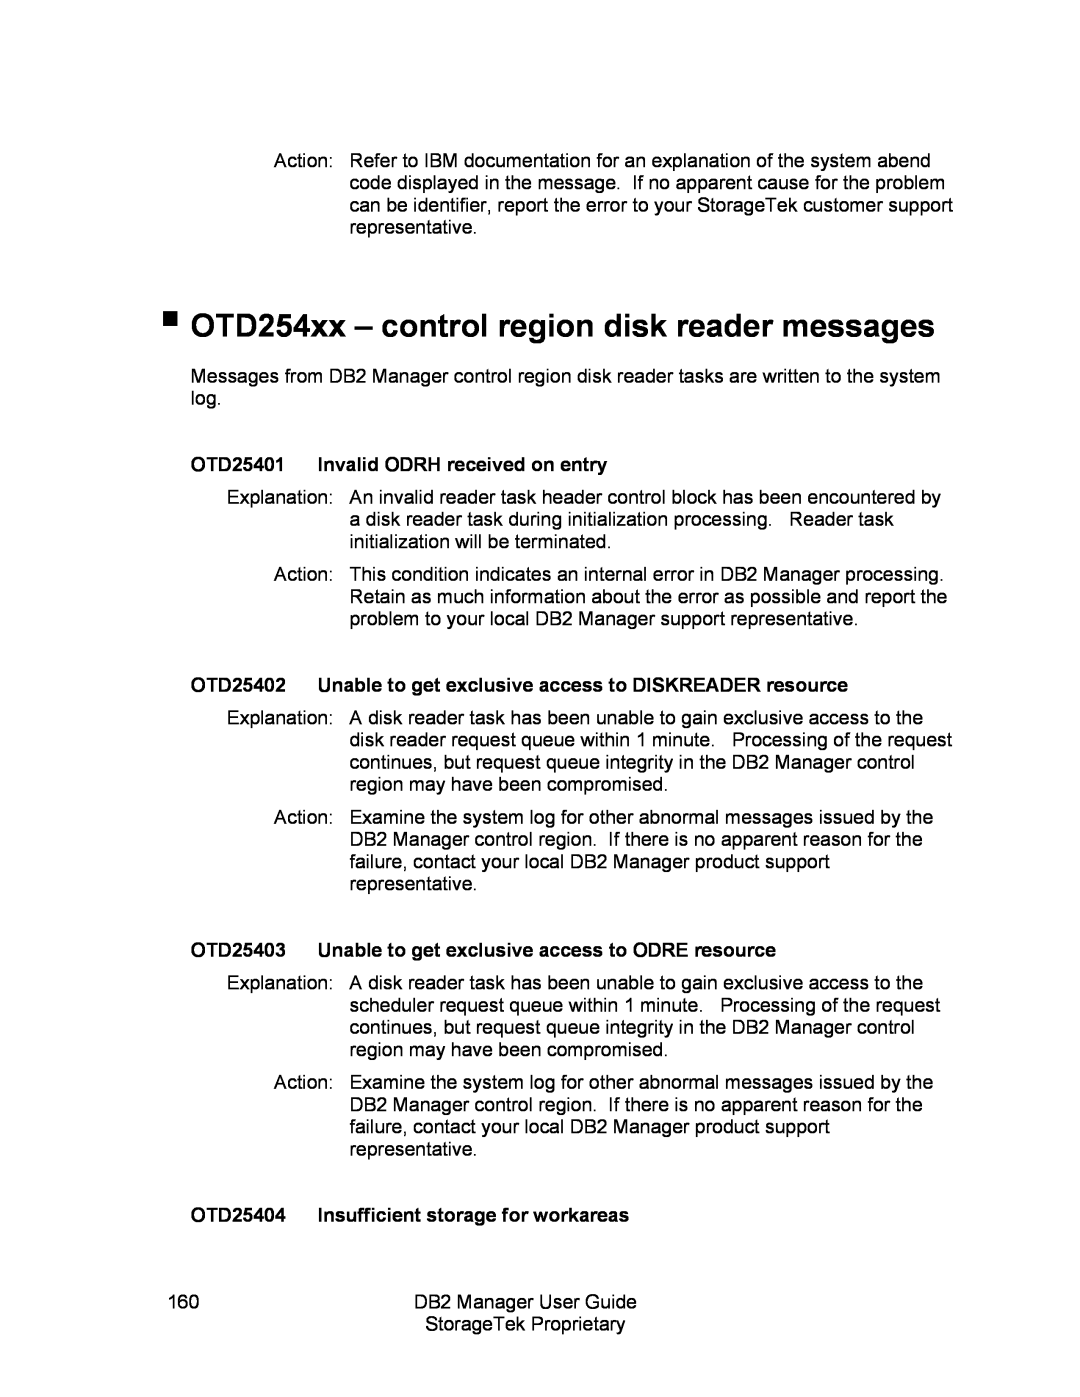 StorageTek 312564001 manual OTD254xx – control region disk reader messages, OTD25401 Invalid ODRH received on entry 